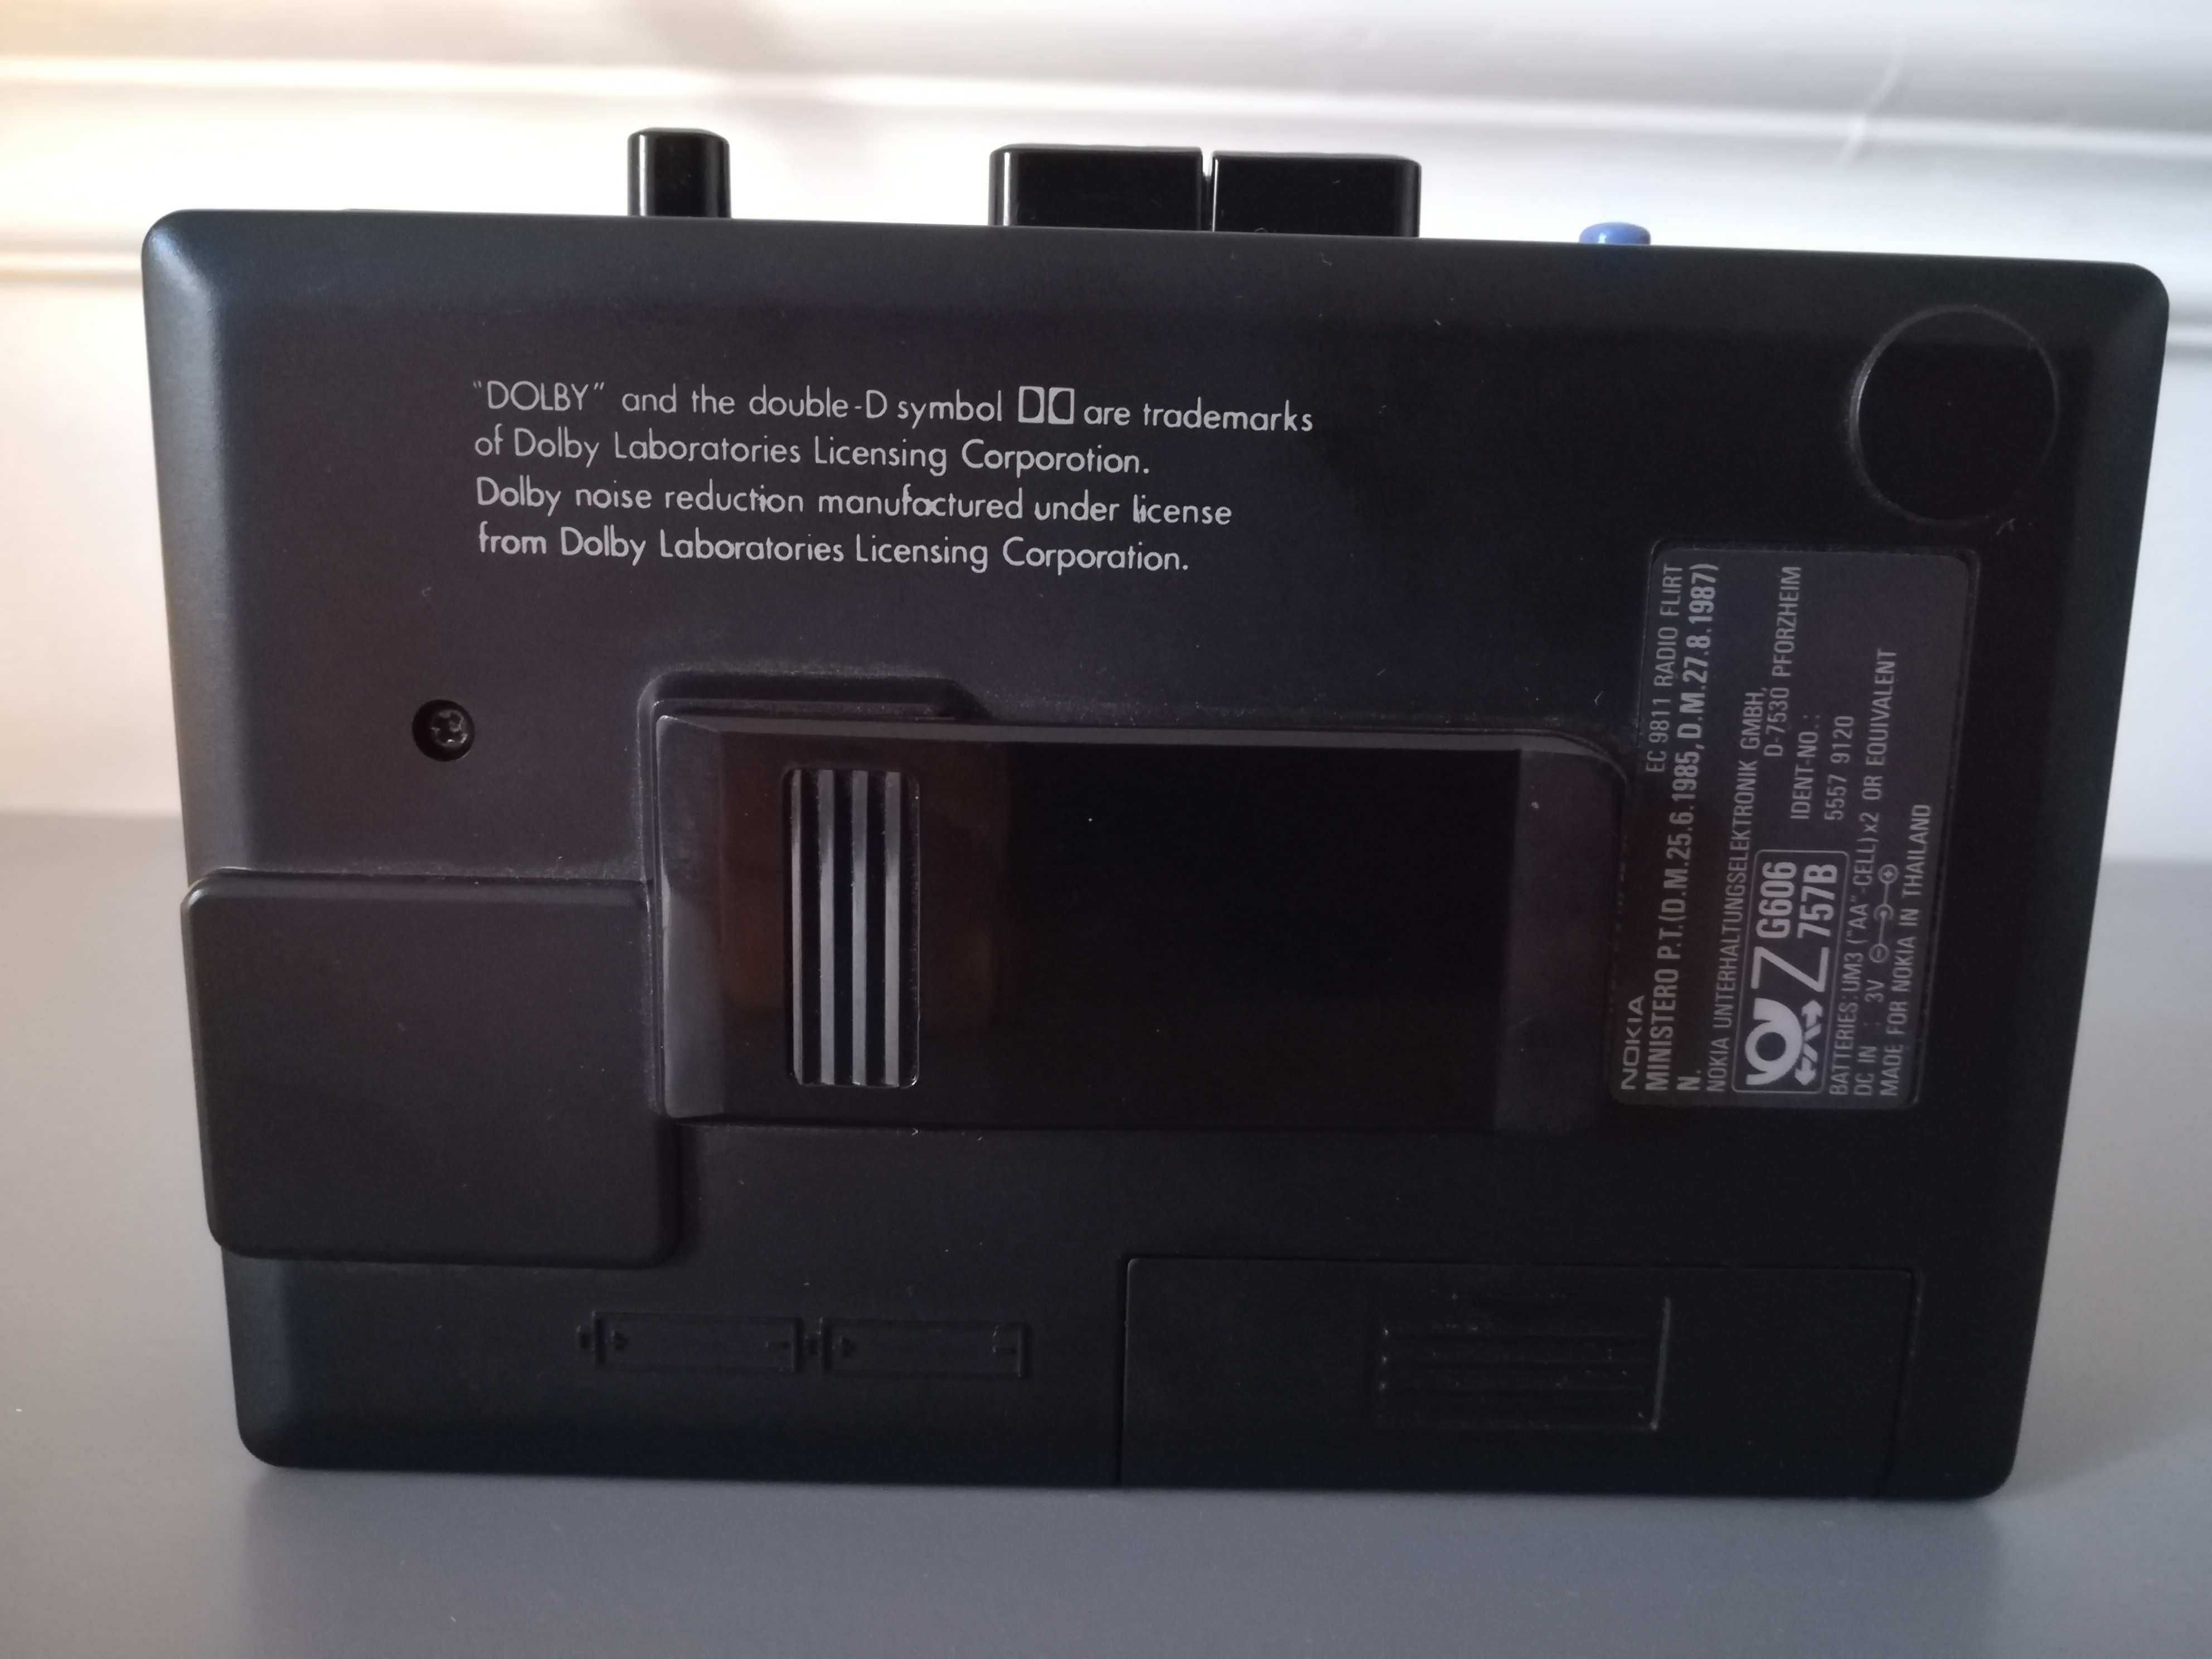 Walkman Luxor Oceanic 9811 (NOVO) - cassette player vintage